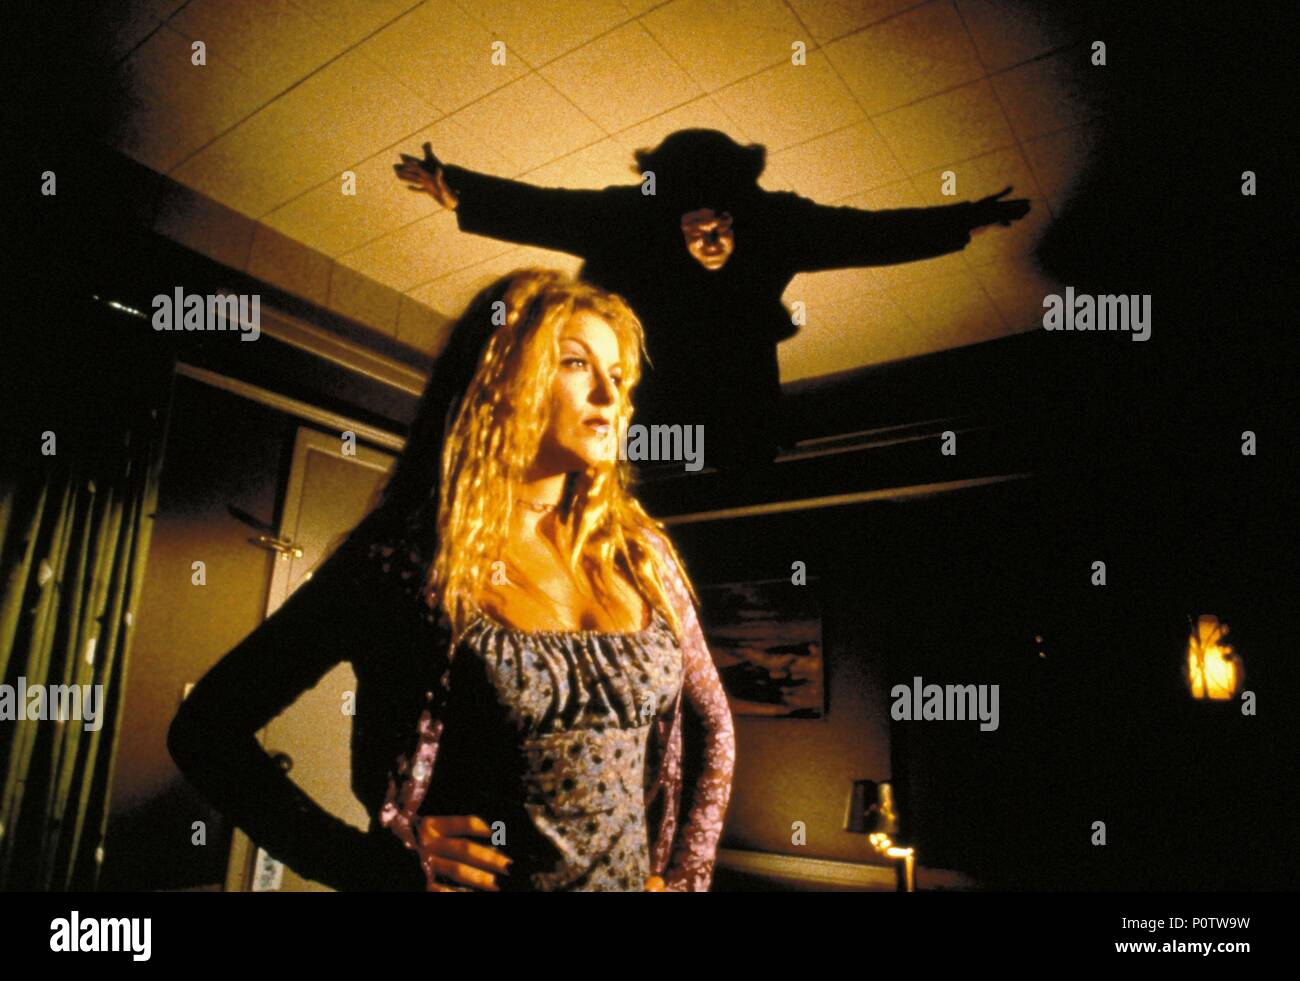 Original Film Title: VAMPIRES.  English Title: VAMPIRES.  Film Director: JOHN CARPENTER.  Year: 1998.  Stars: SHERYL LEE. Credit: COLUMBIA TRI STAR / Cortesía Album Stock Photo